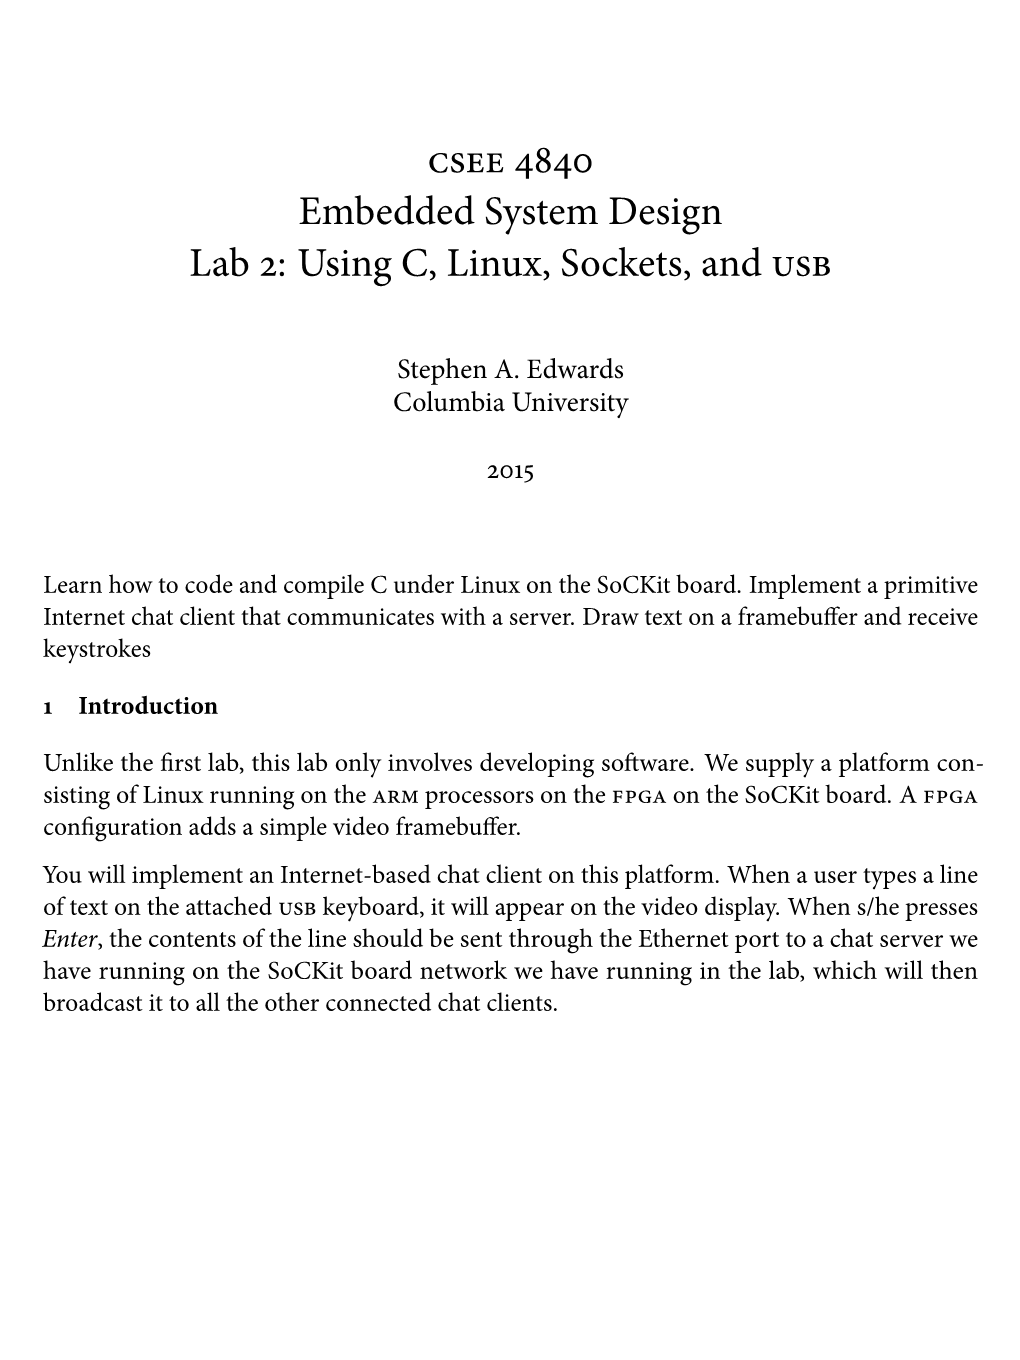 Embedded System Design Lab : Using C, Linux, Sockets